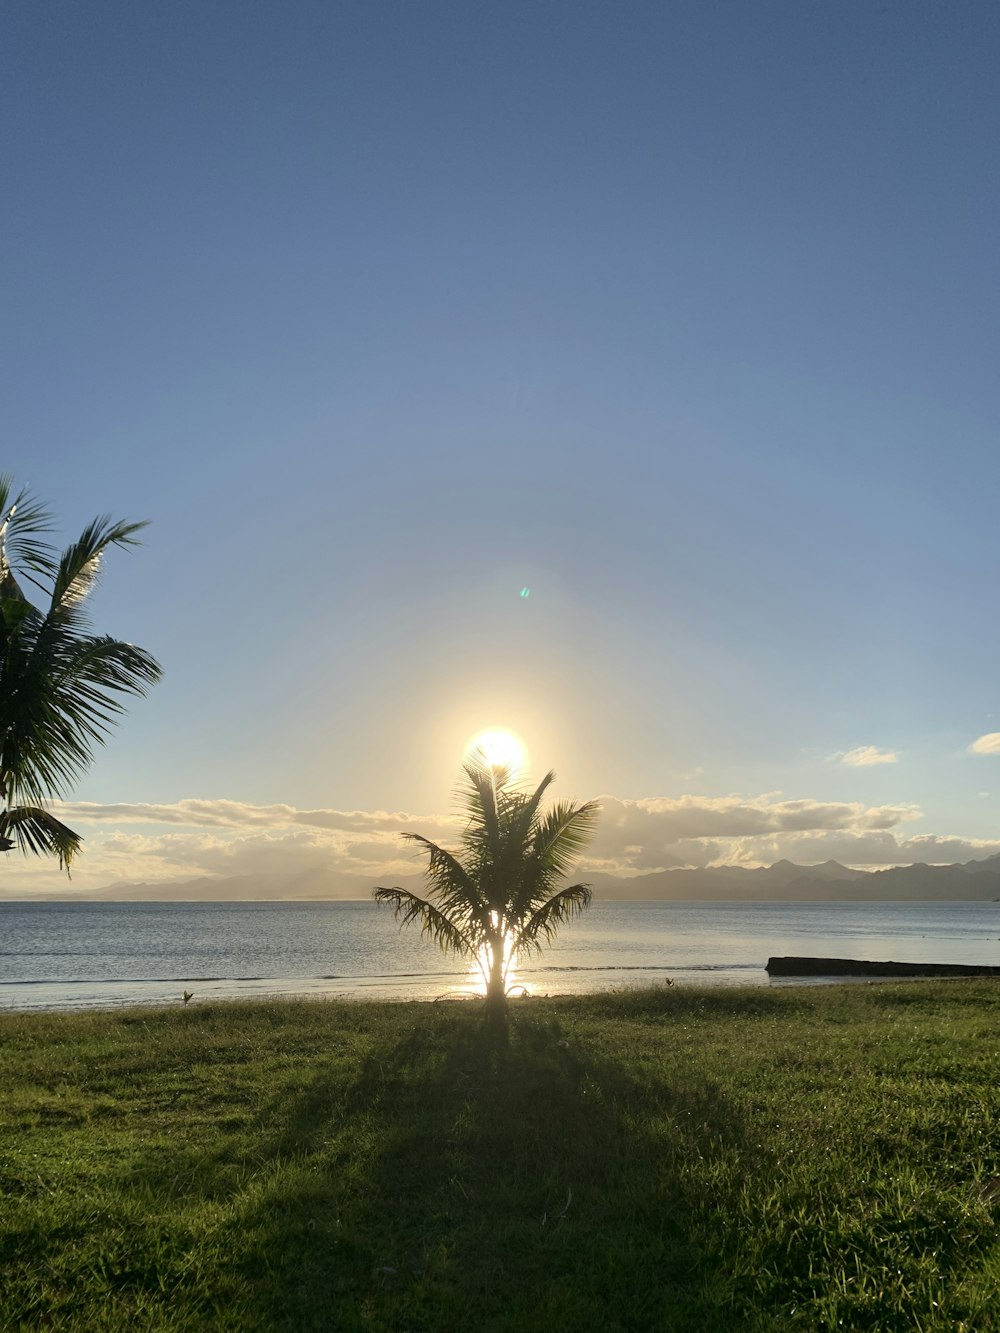 sun setting behind palm tree at the beach